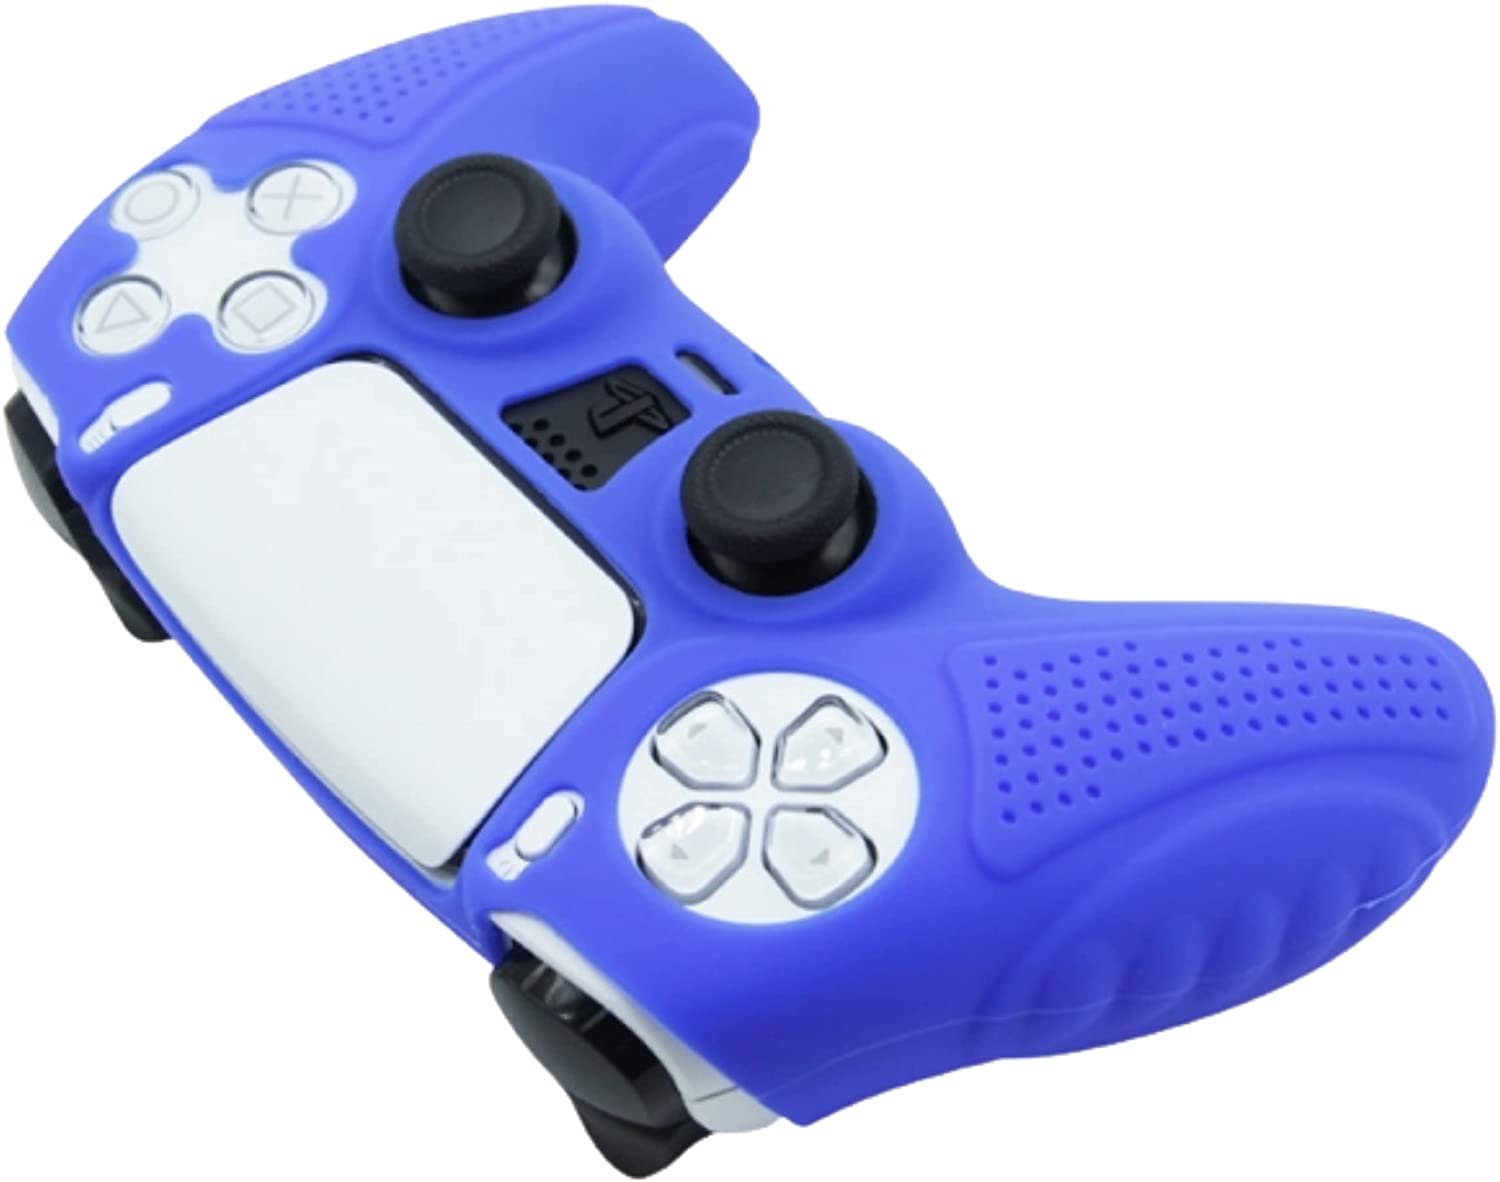 Funda para empuñaduras de controlador de PS5, Pandaren PS5 Controller Skin  para Sony Playstation 5, funda de silicona antideslizante a prueba de